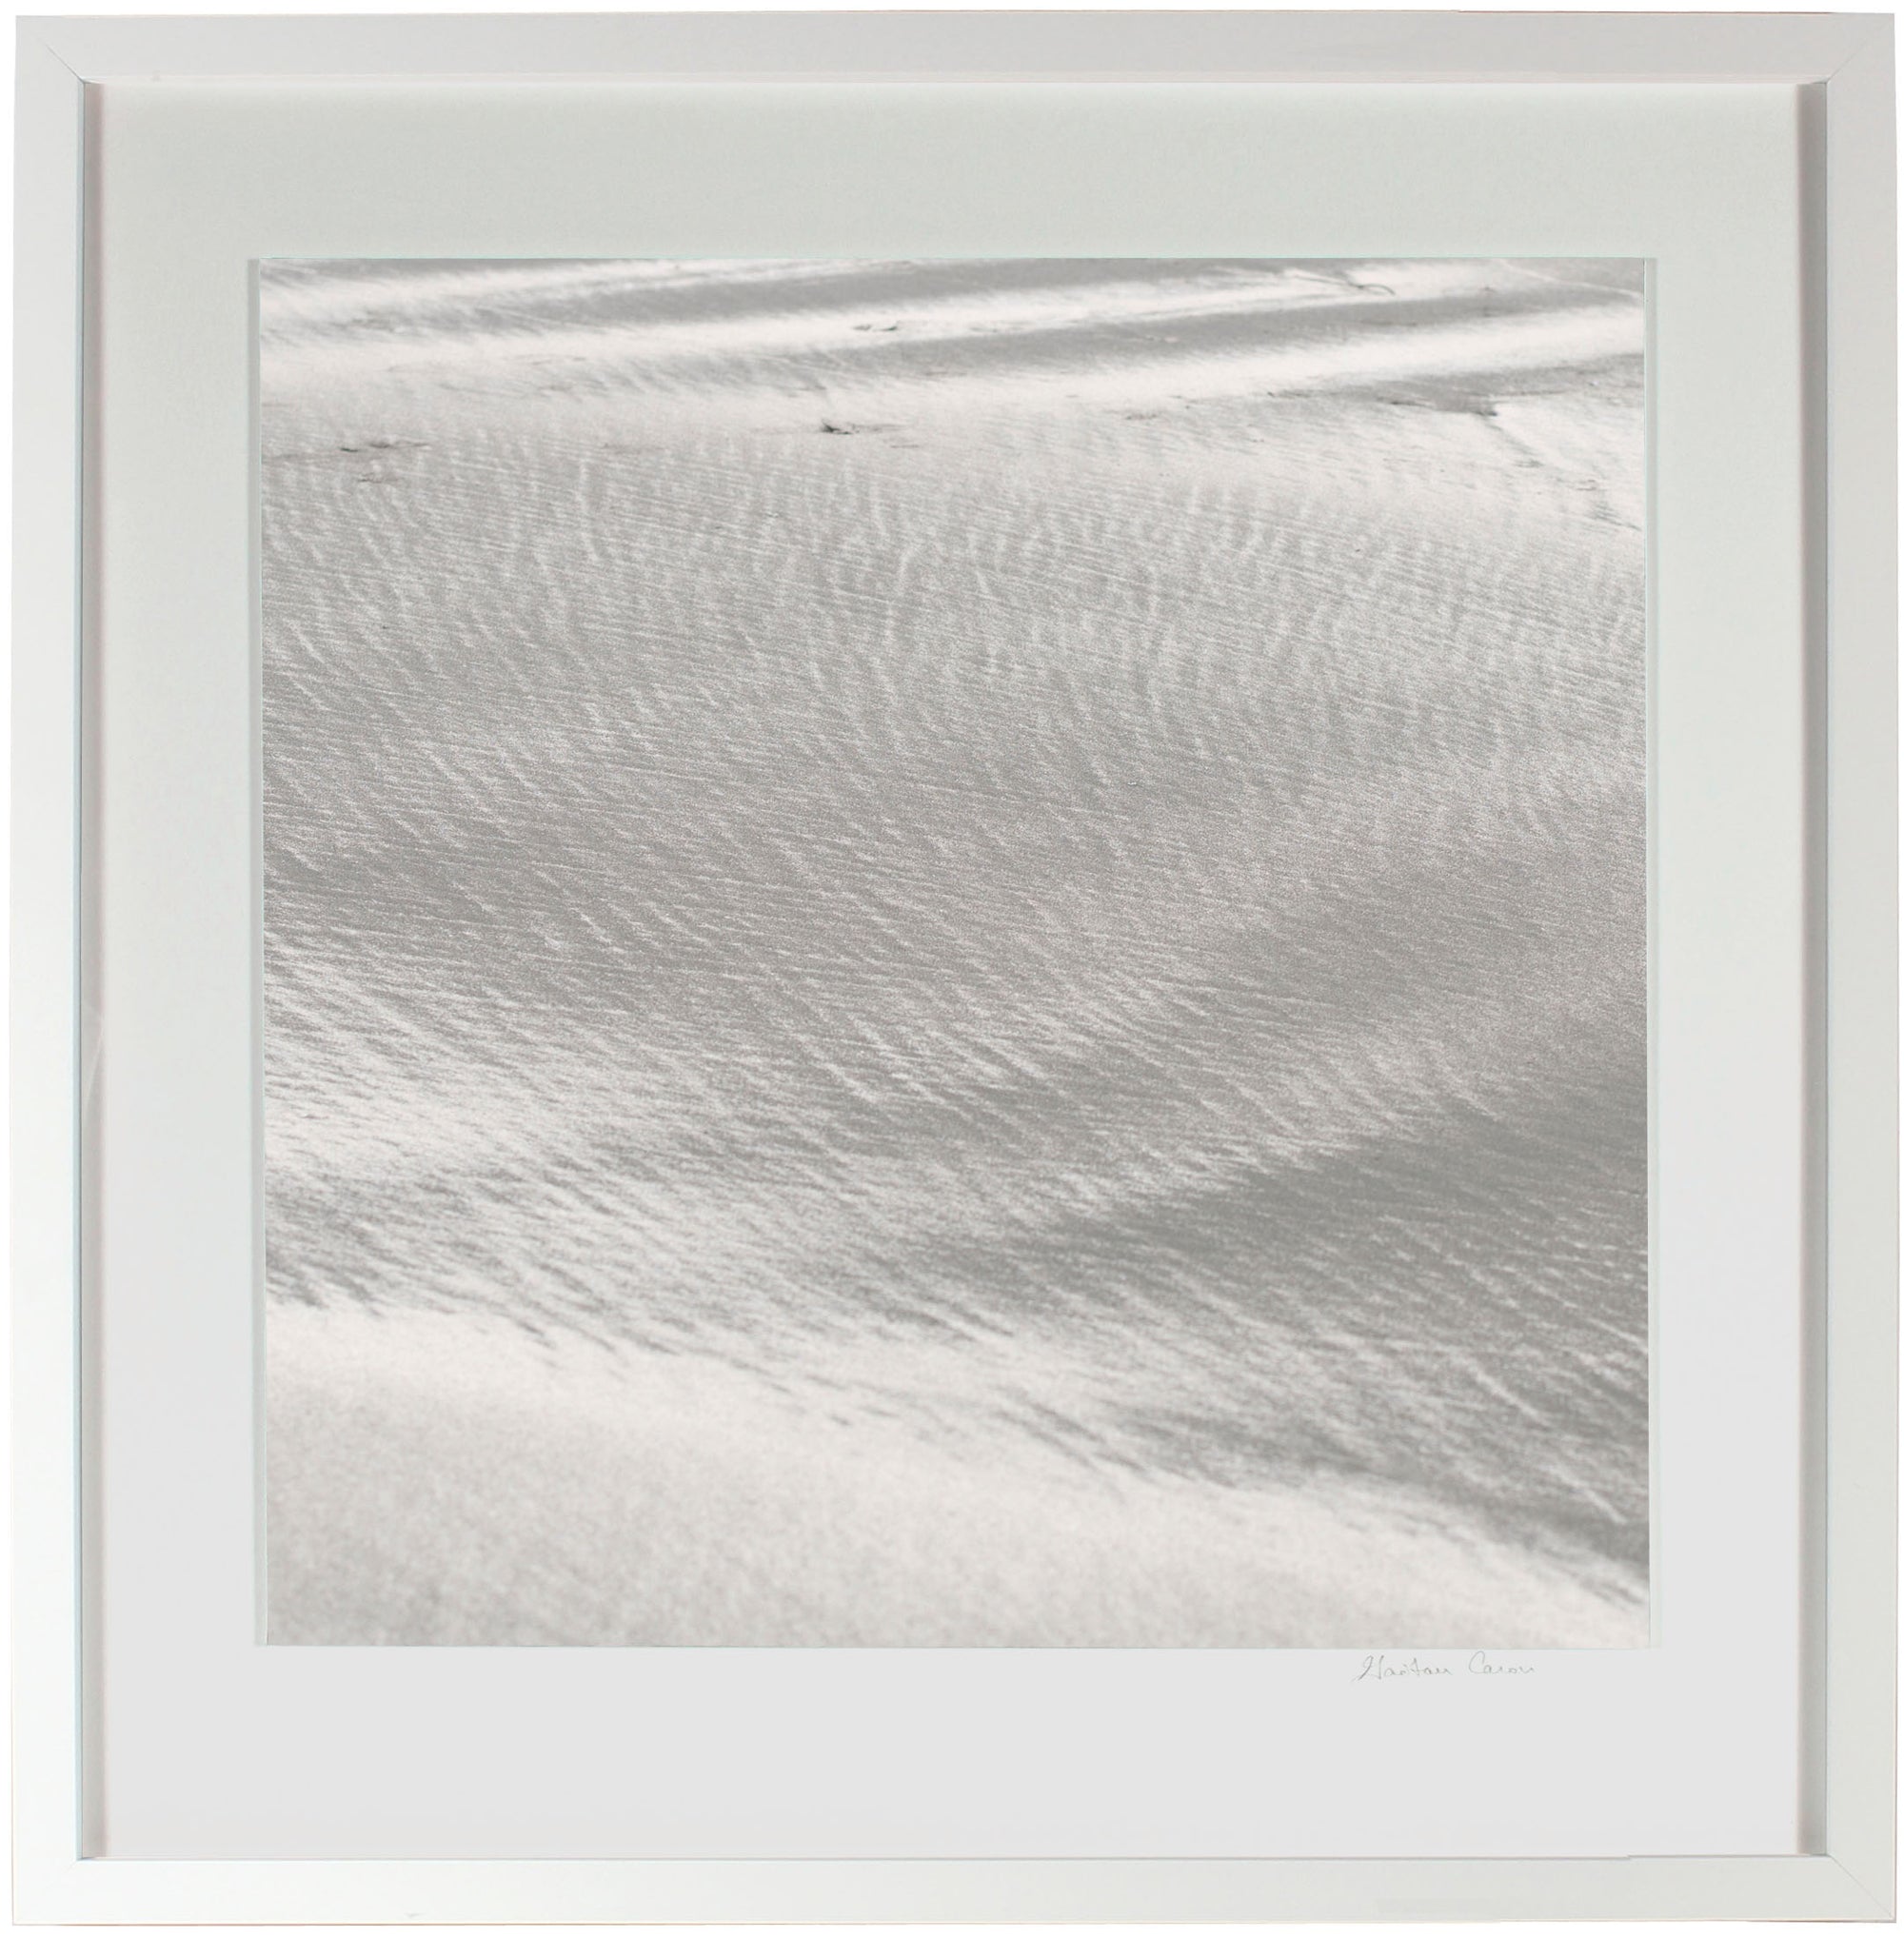 <I>Texture 10: Shell Dust</I><br>Mendocino Coast, California, 2015<br><br>GC0393